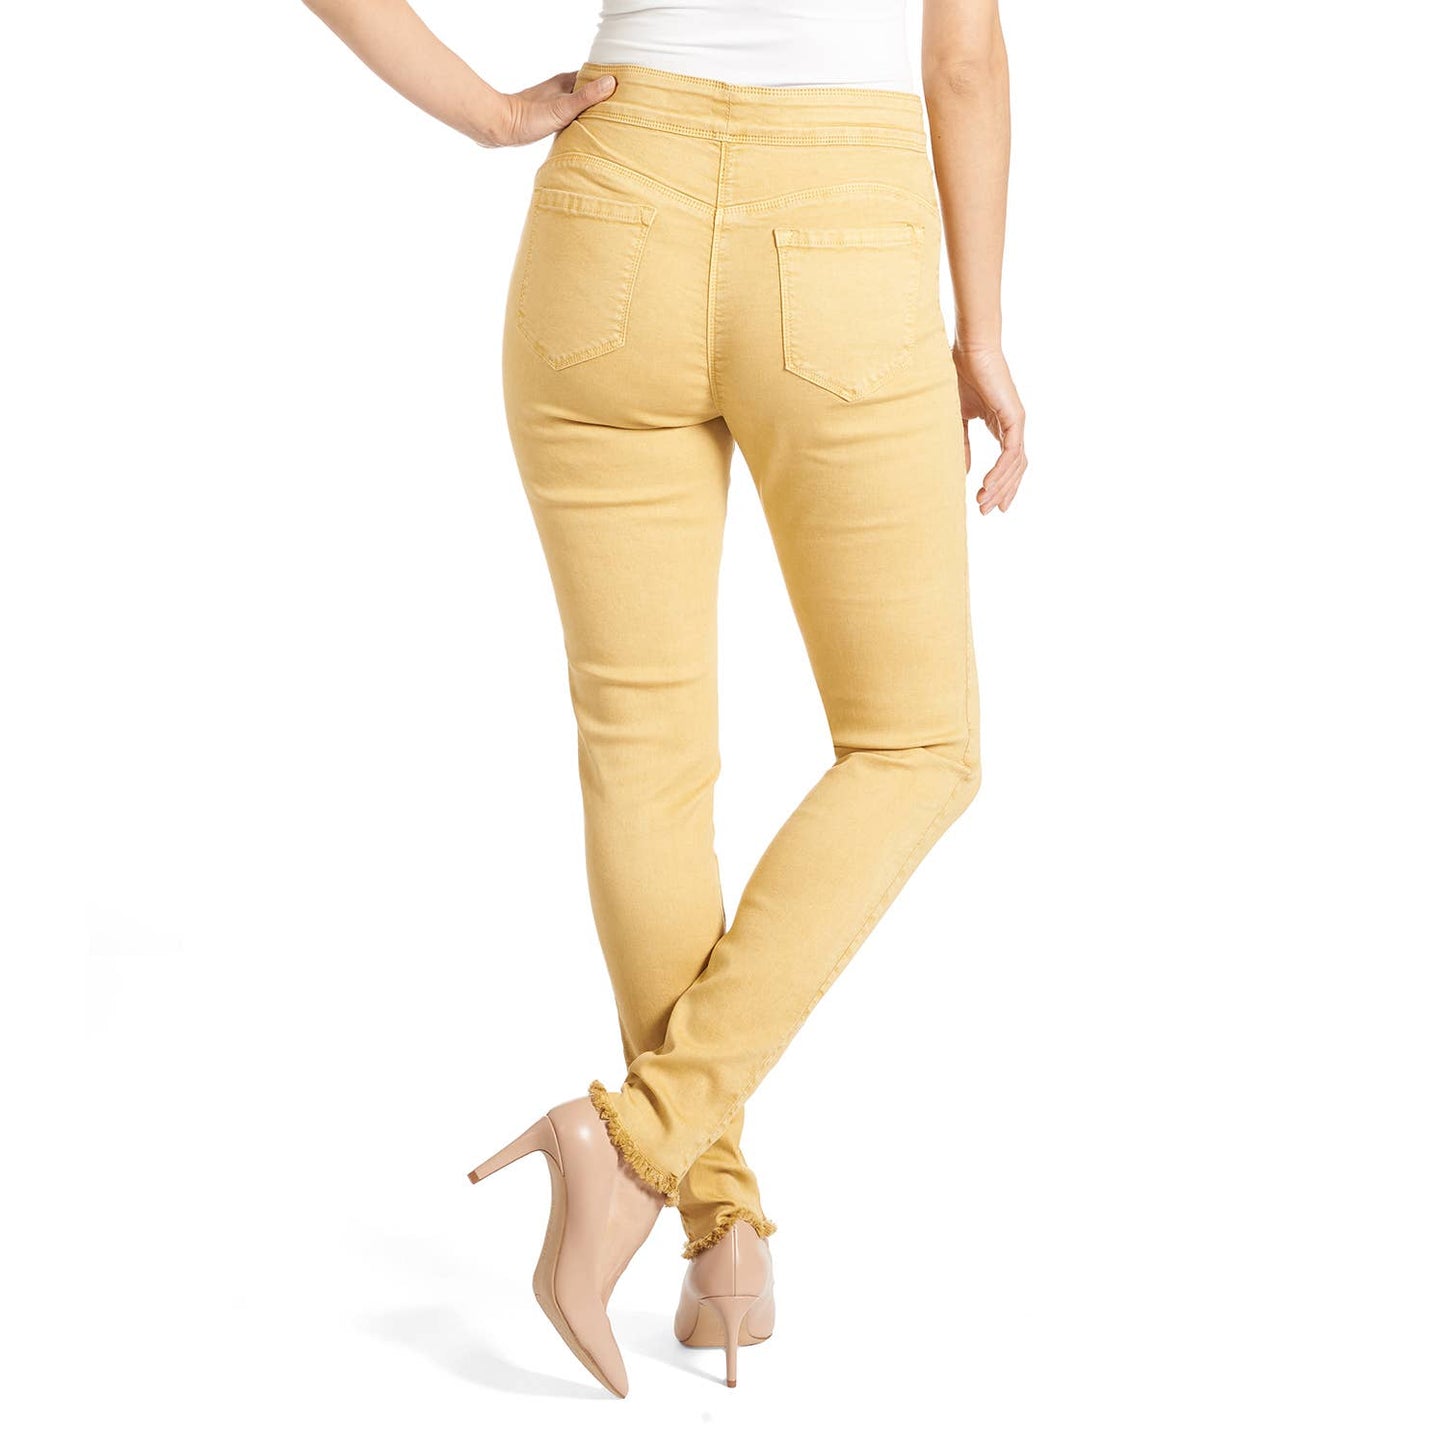 COCO + CARMEN - OMG Skinny Fringe Bottom Colored Jeans: Mustard / XXL